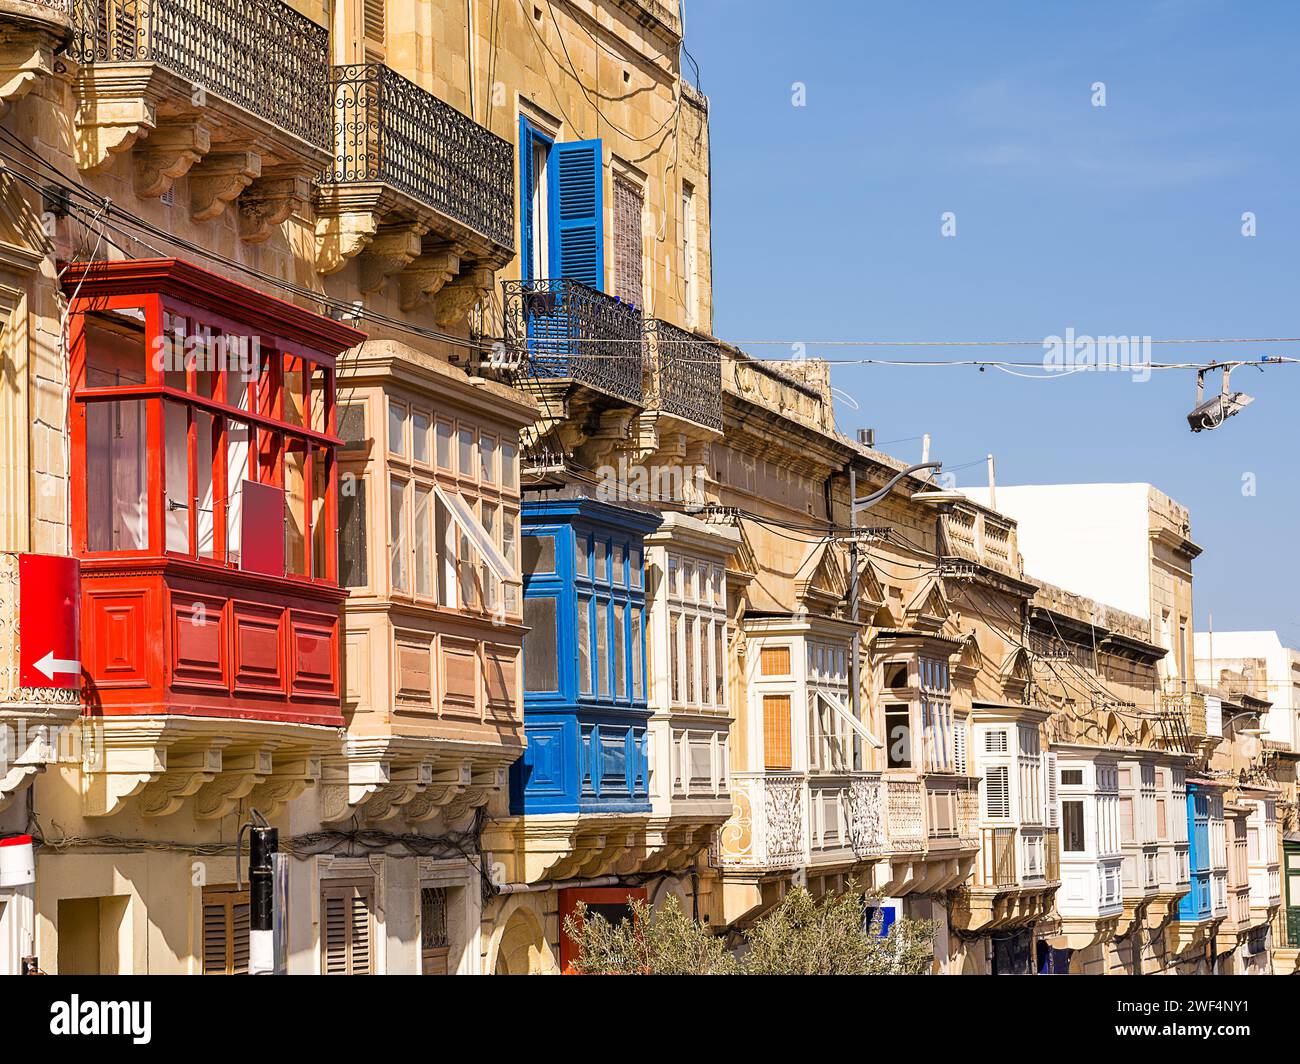 Gallarija, closed balconies, typical of Malta, of various colours Stock Photo